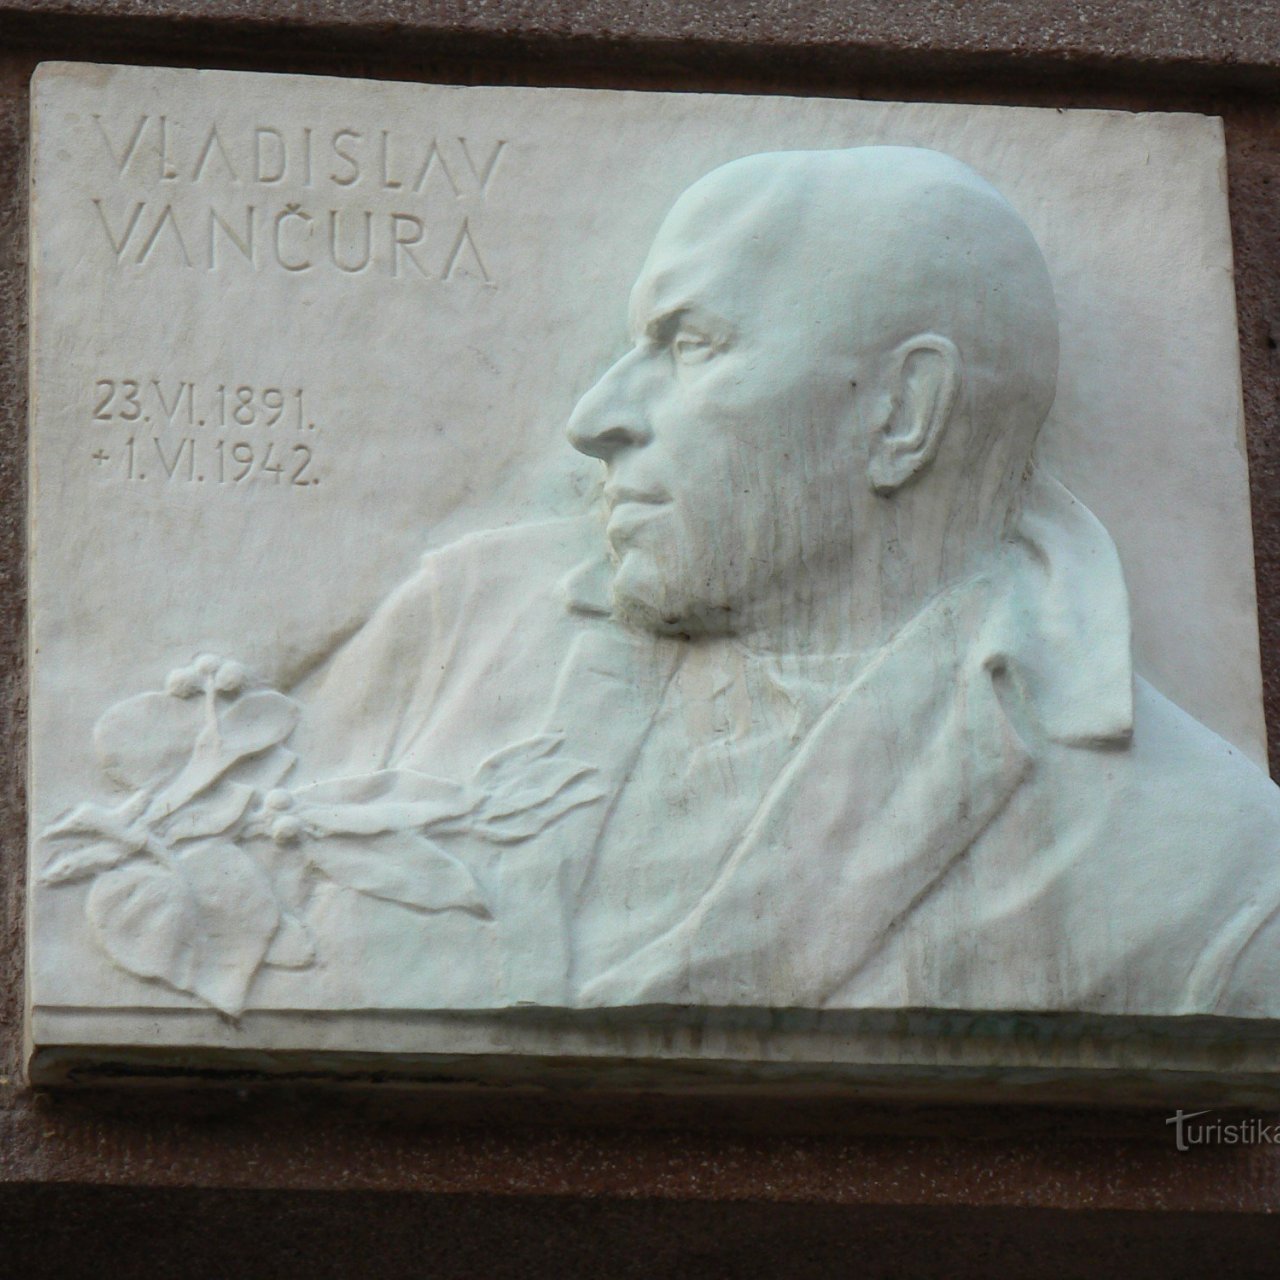 Praha 1 - Klimentská - pamětní deska Vladislav Vančura